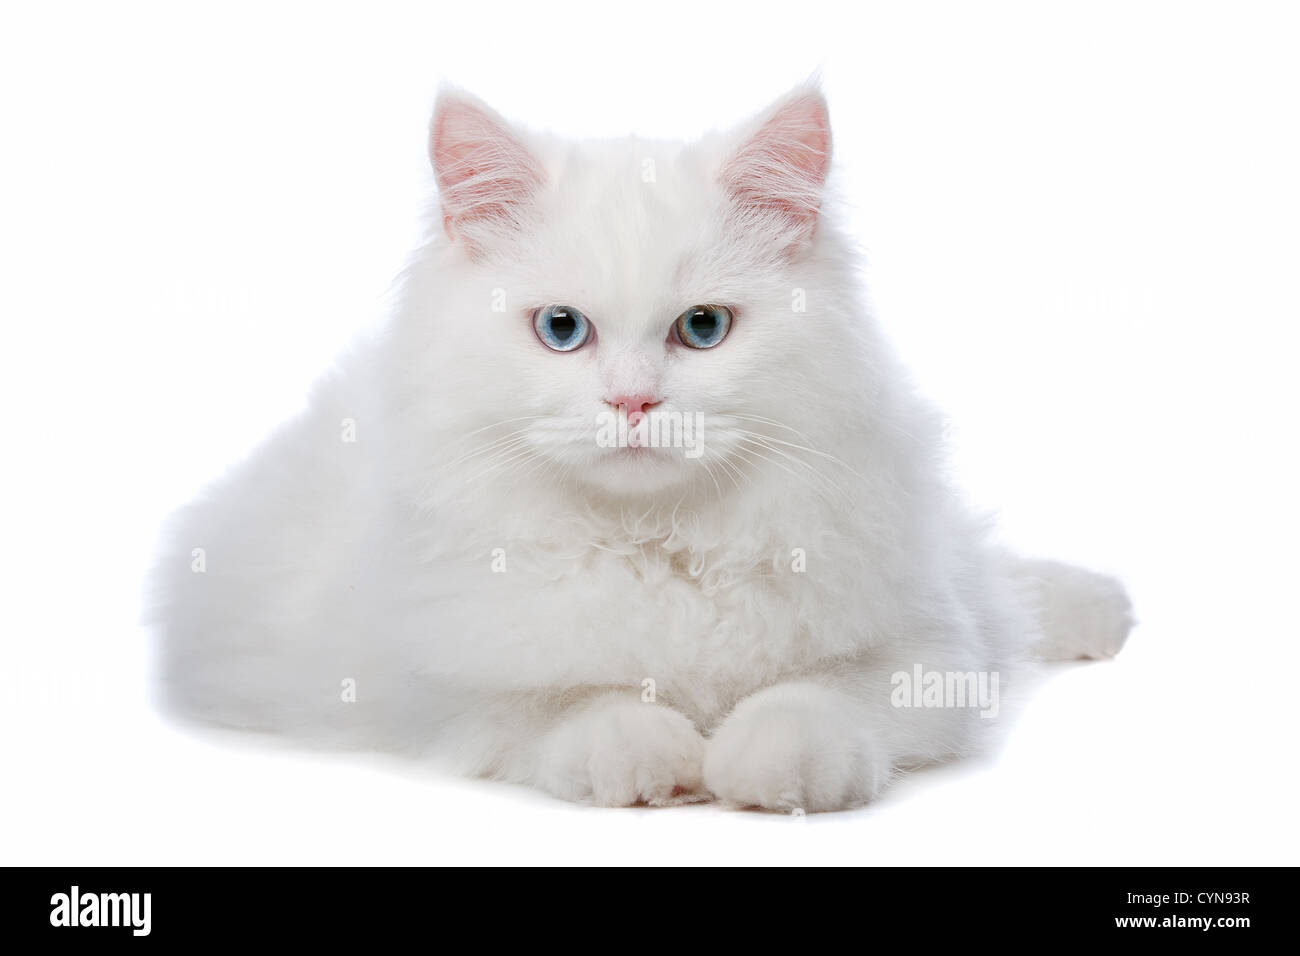 Gato Blanco con ojos azules. Sobre un fondo blanco. Foto de stock